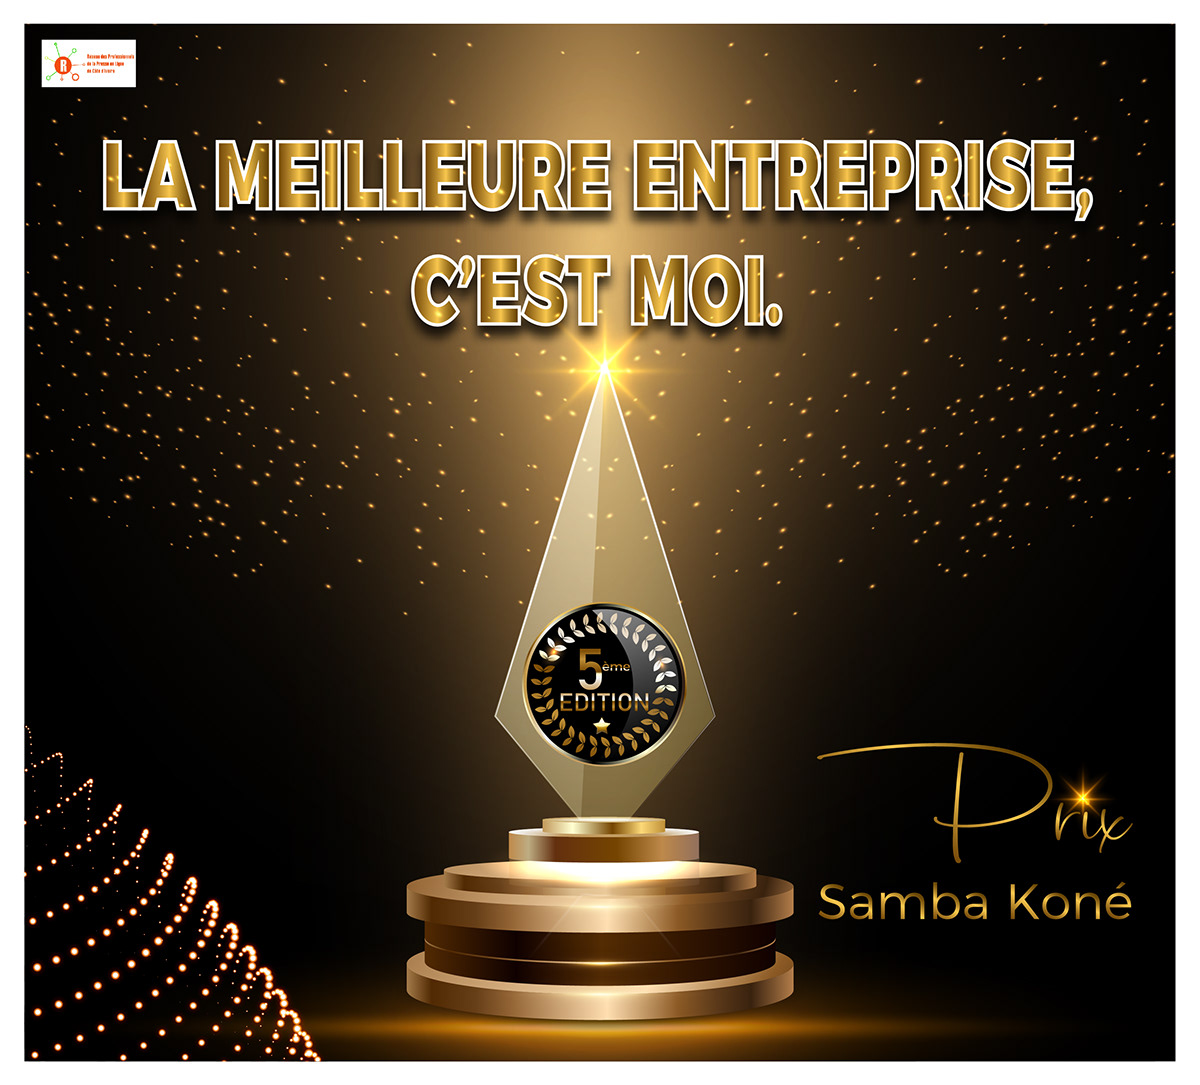 award certificate journal lifestyle Photography  editorial book design presse récompense trophées